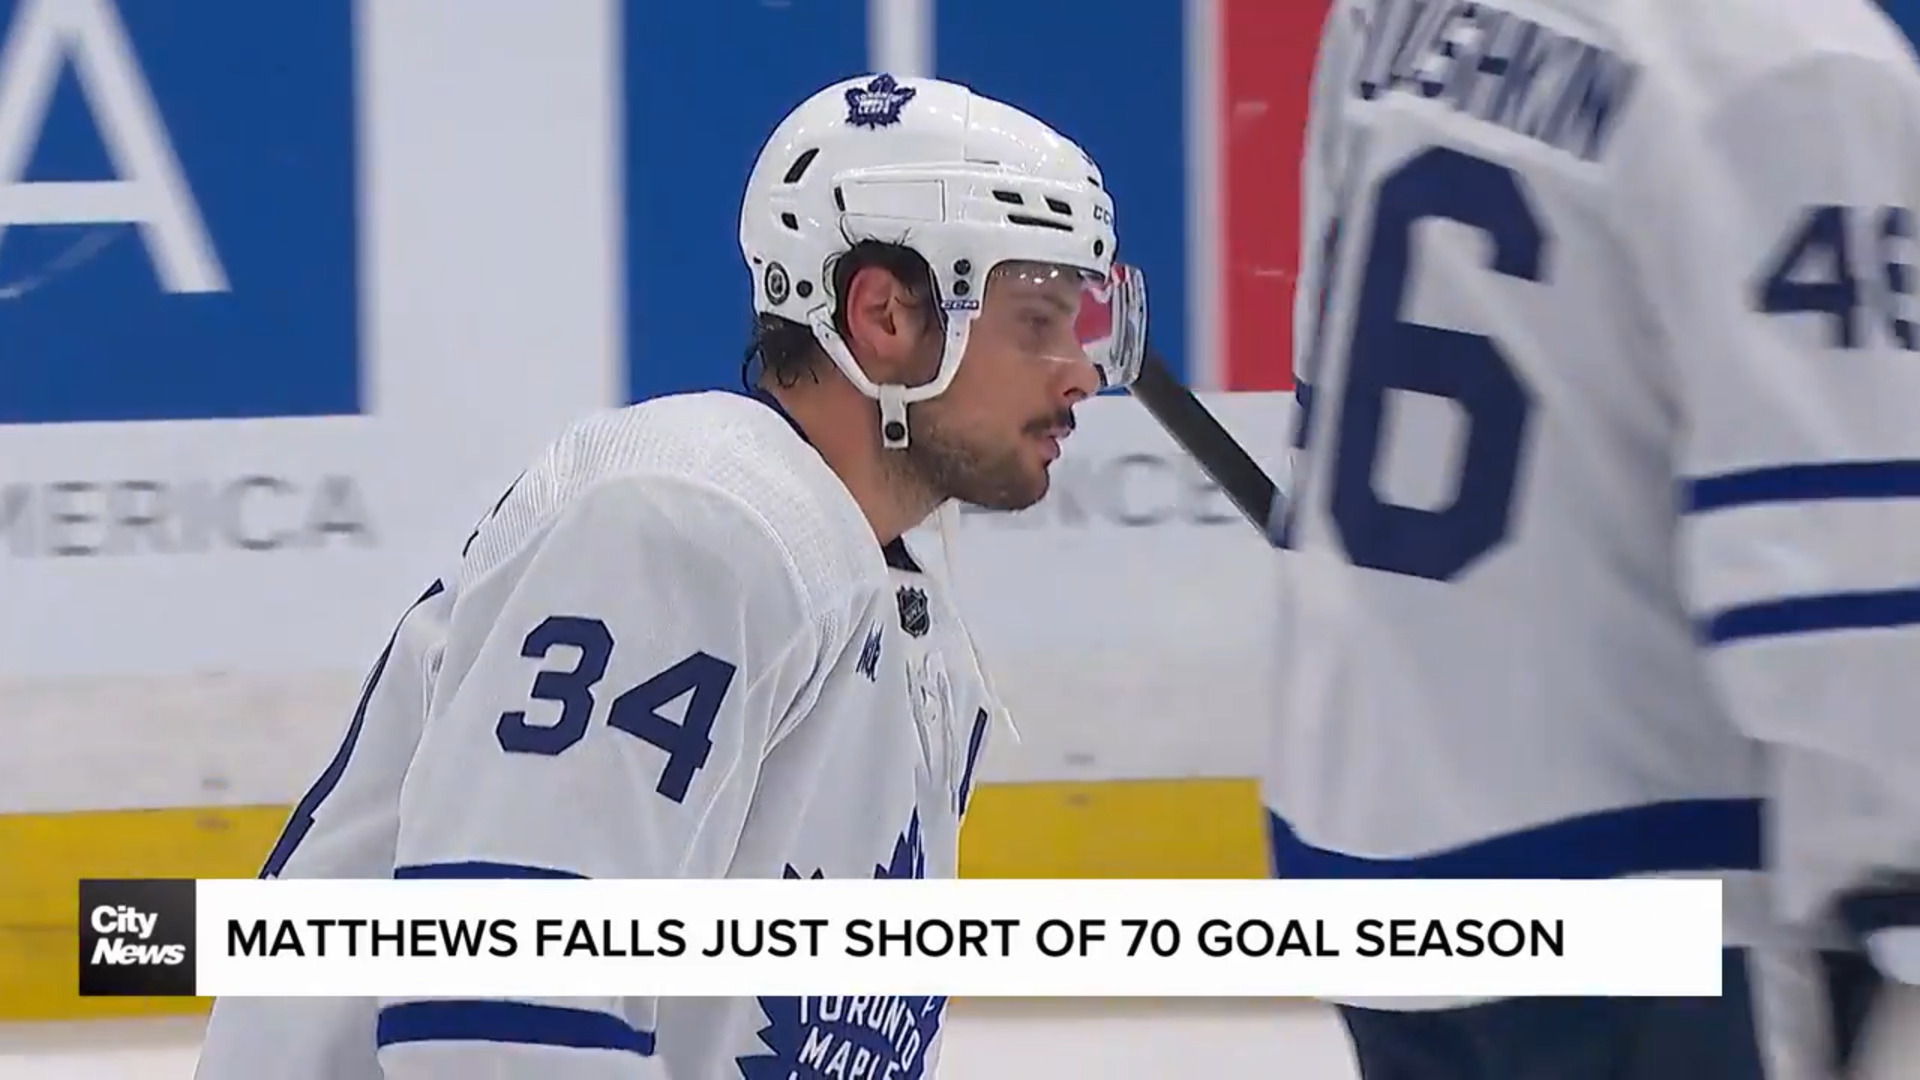 "I wanted it" Leafs' Matthews on 70-goal season